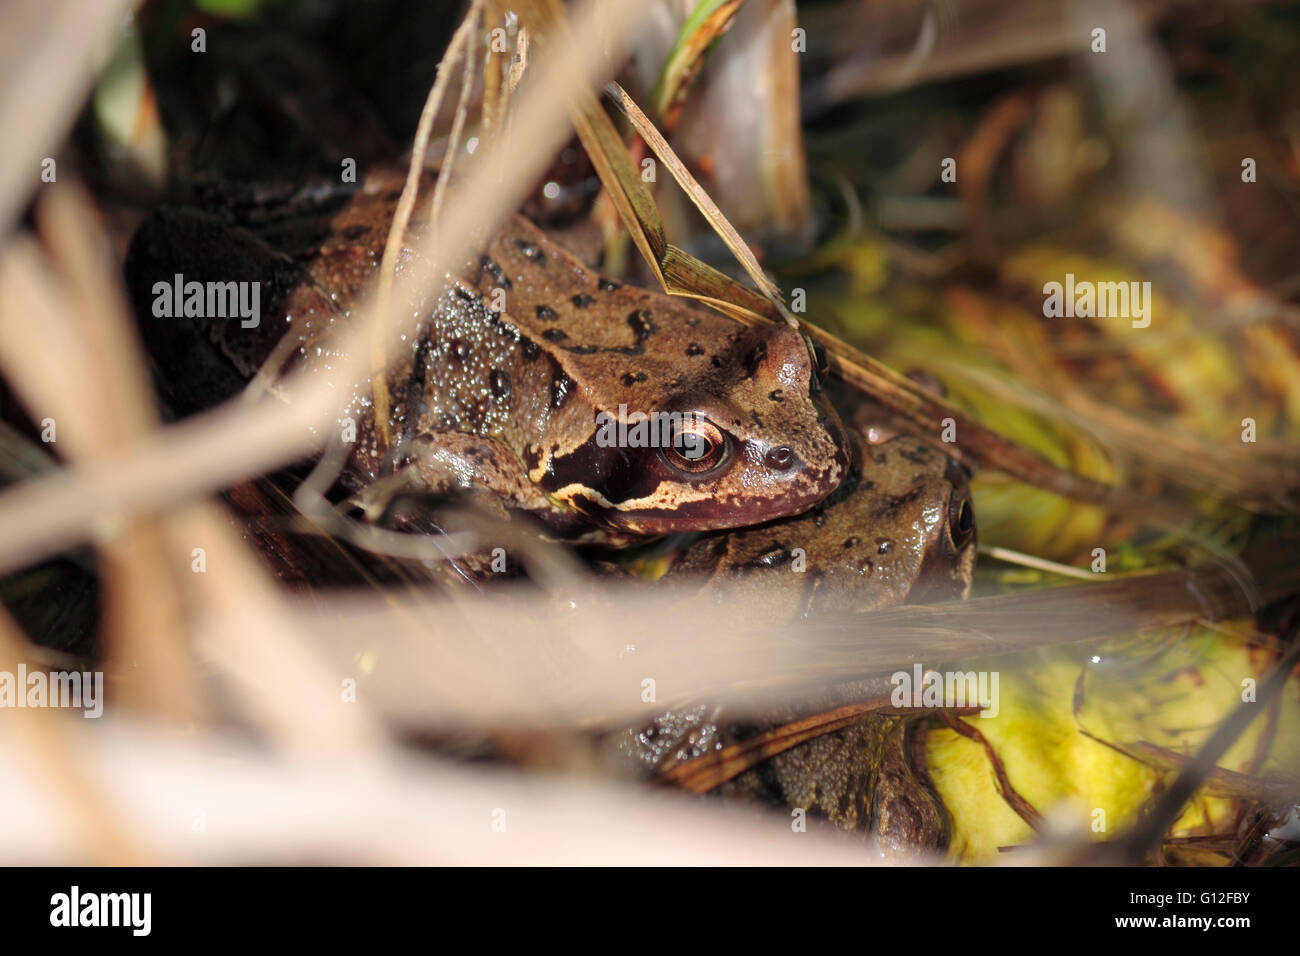 Anglais Common frog Rana temporaria dans un étang de jardin Banque D'Images